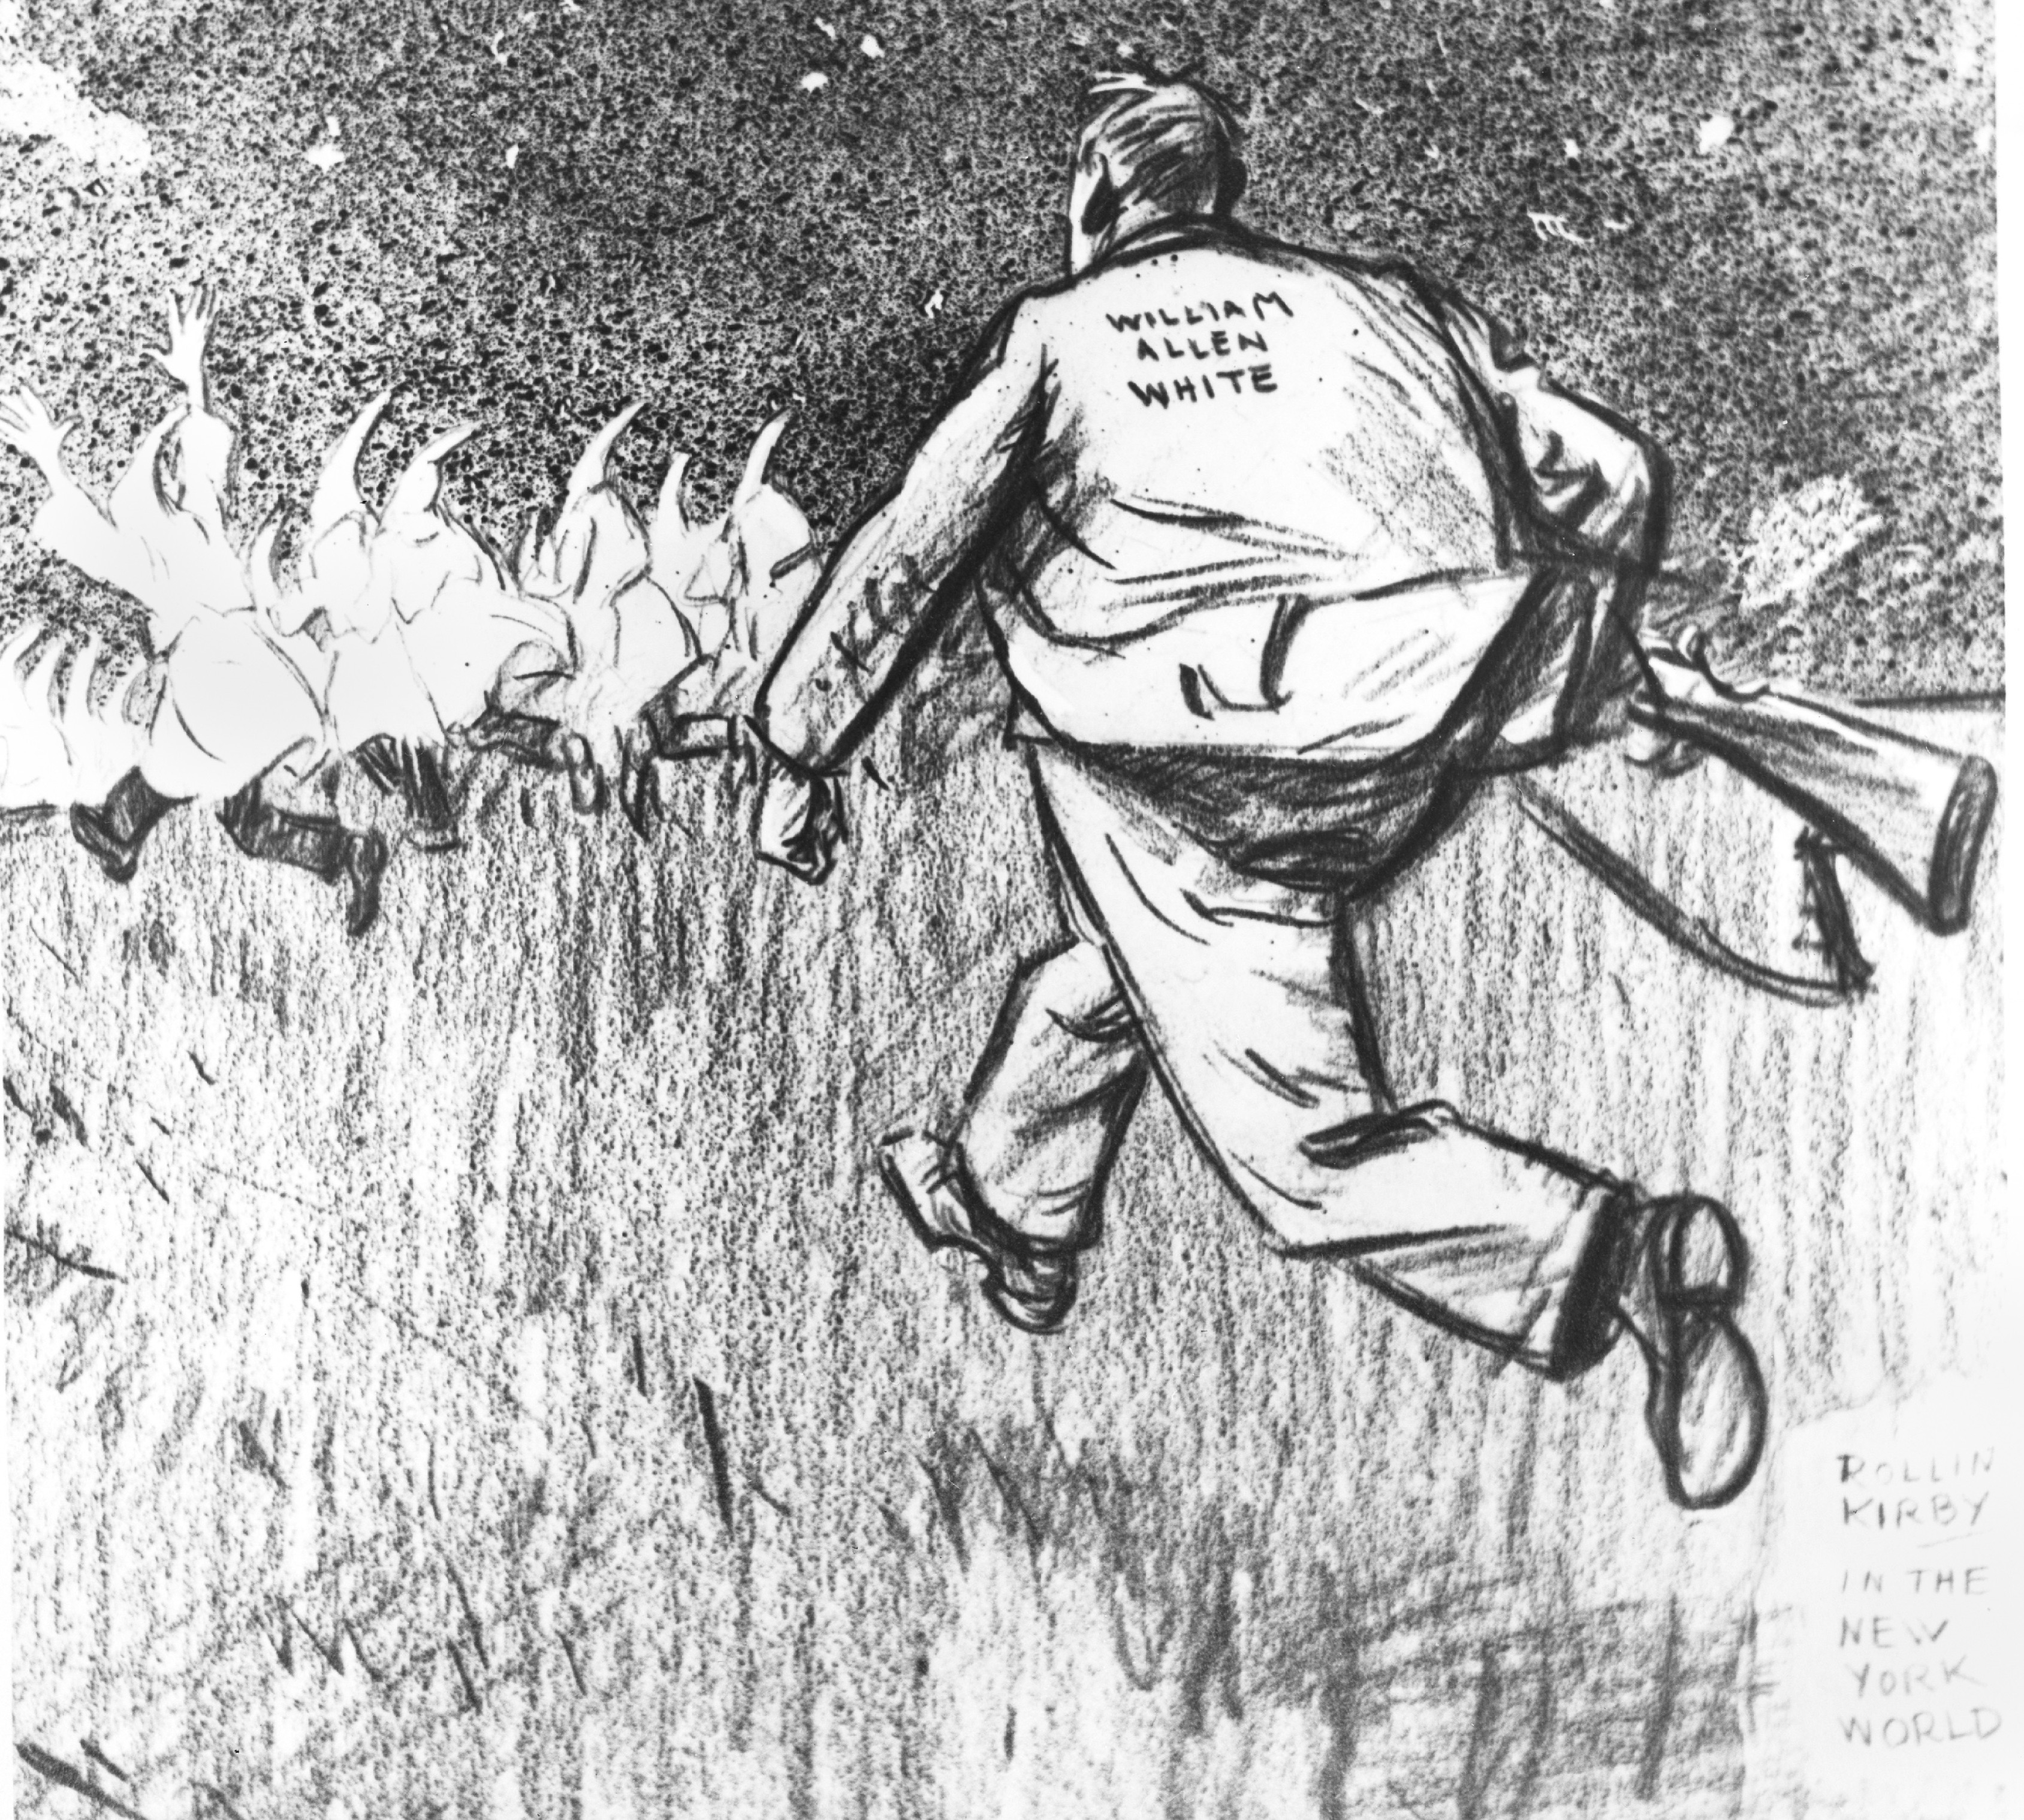 Online Program - William Allen White and the KKK in Kansas: "A Real American Goes Hunting"  Main Splash Image